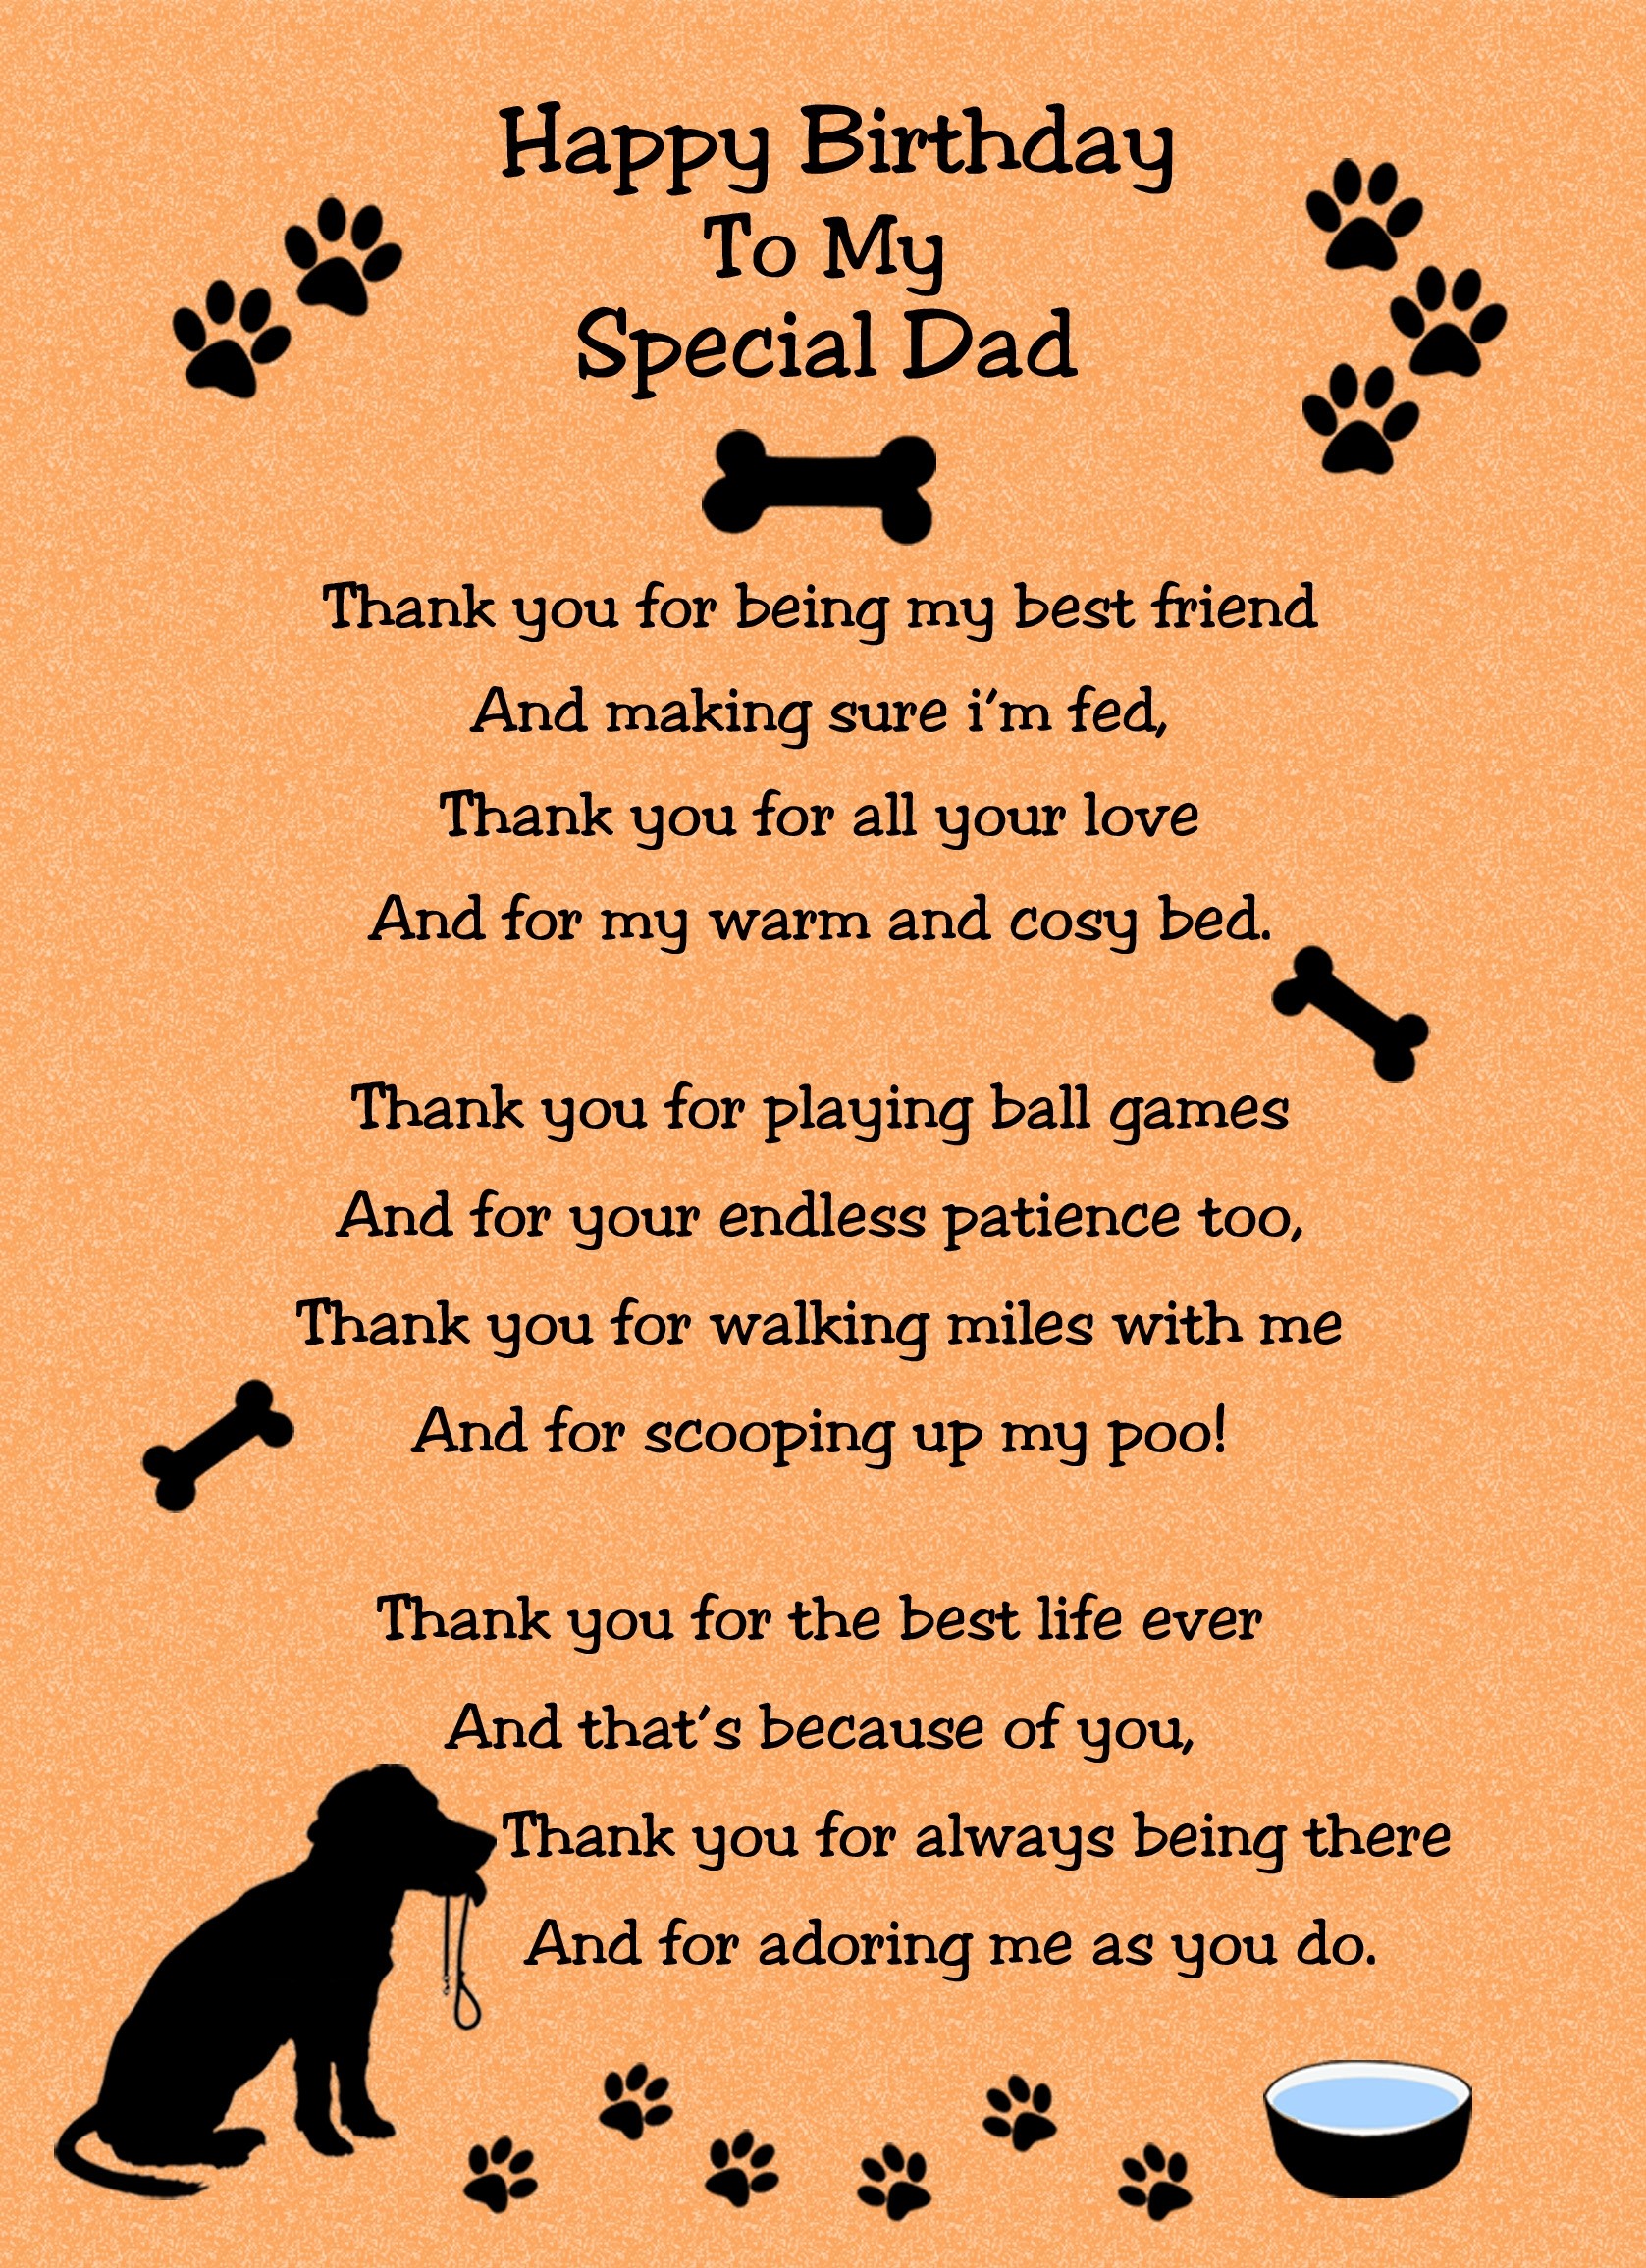 From the Dog Birthday Card (Orange)